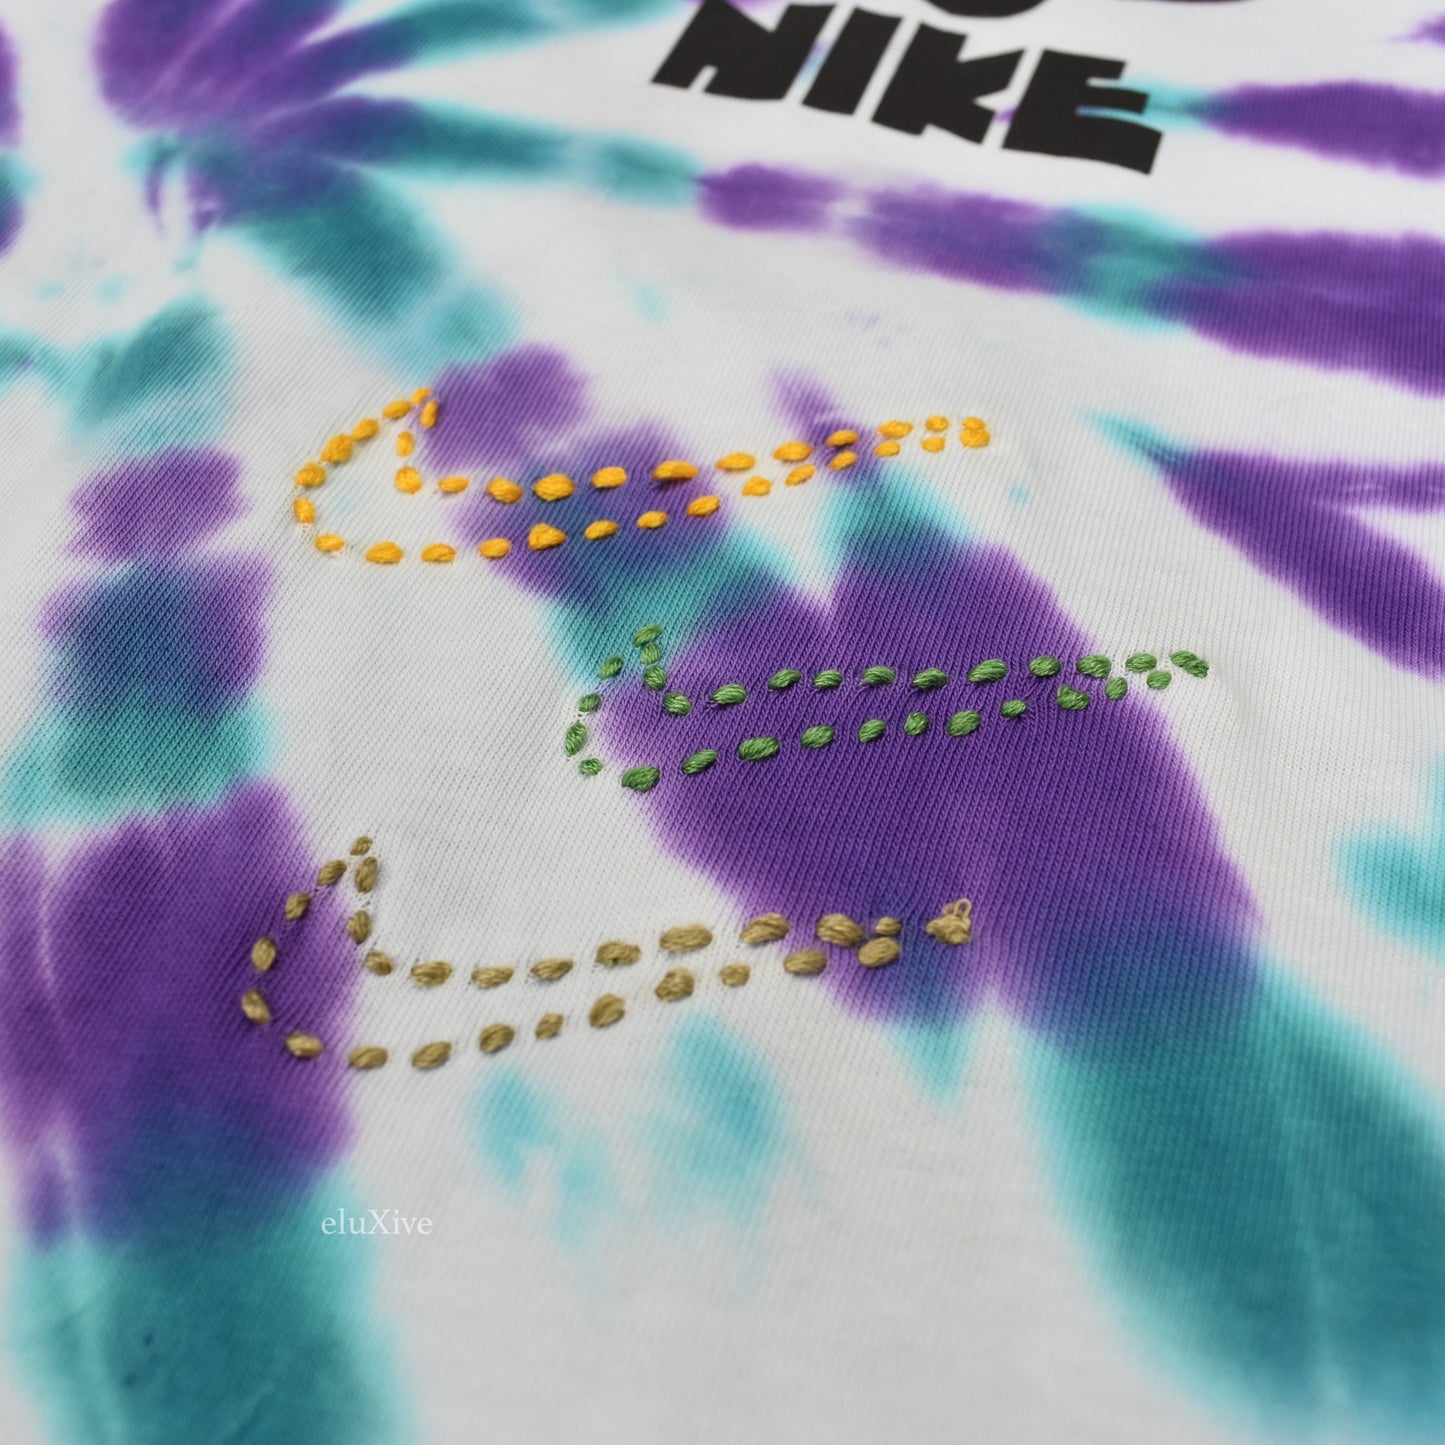 Nike - Tie-Dye Hand Embroidered Swoosh Logo T-Shirt